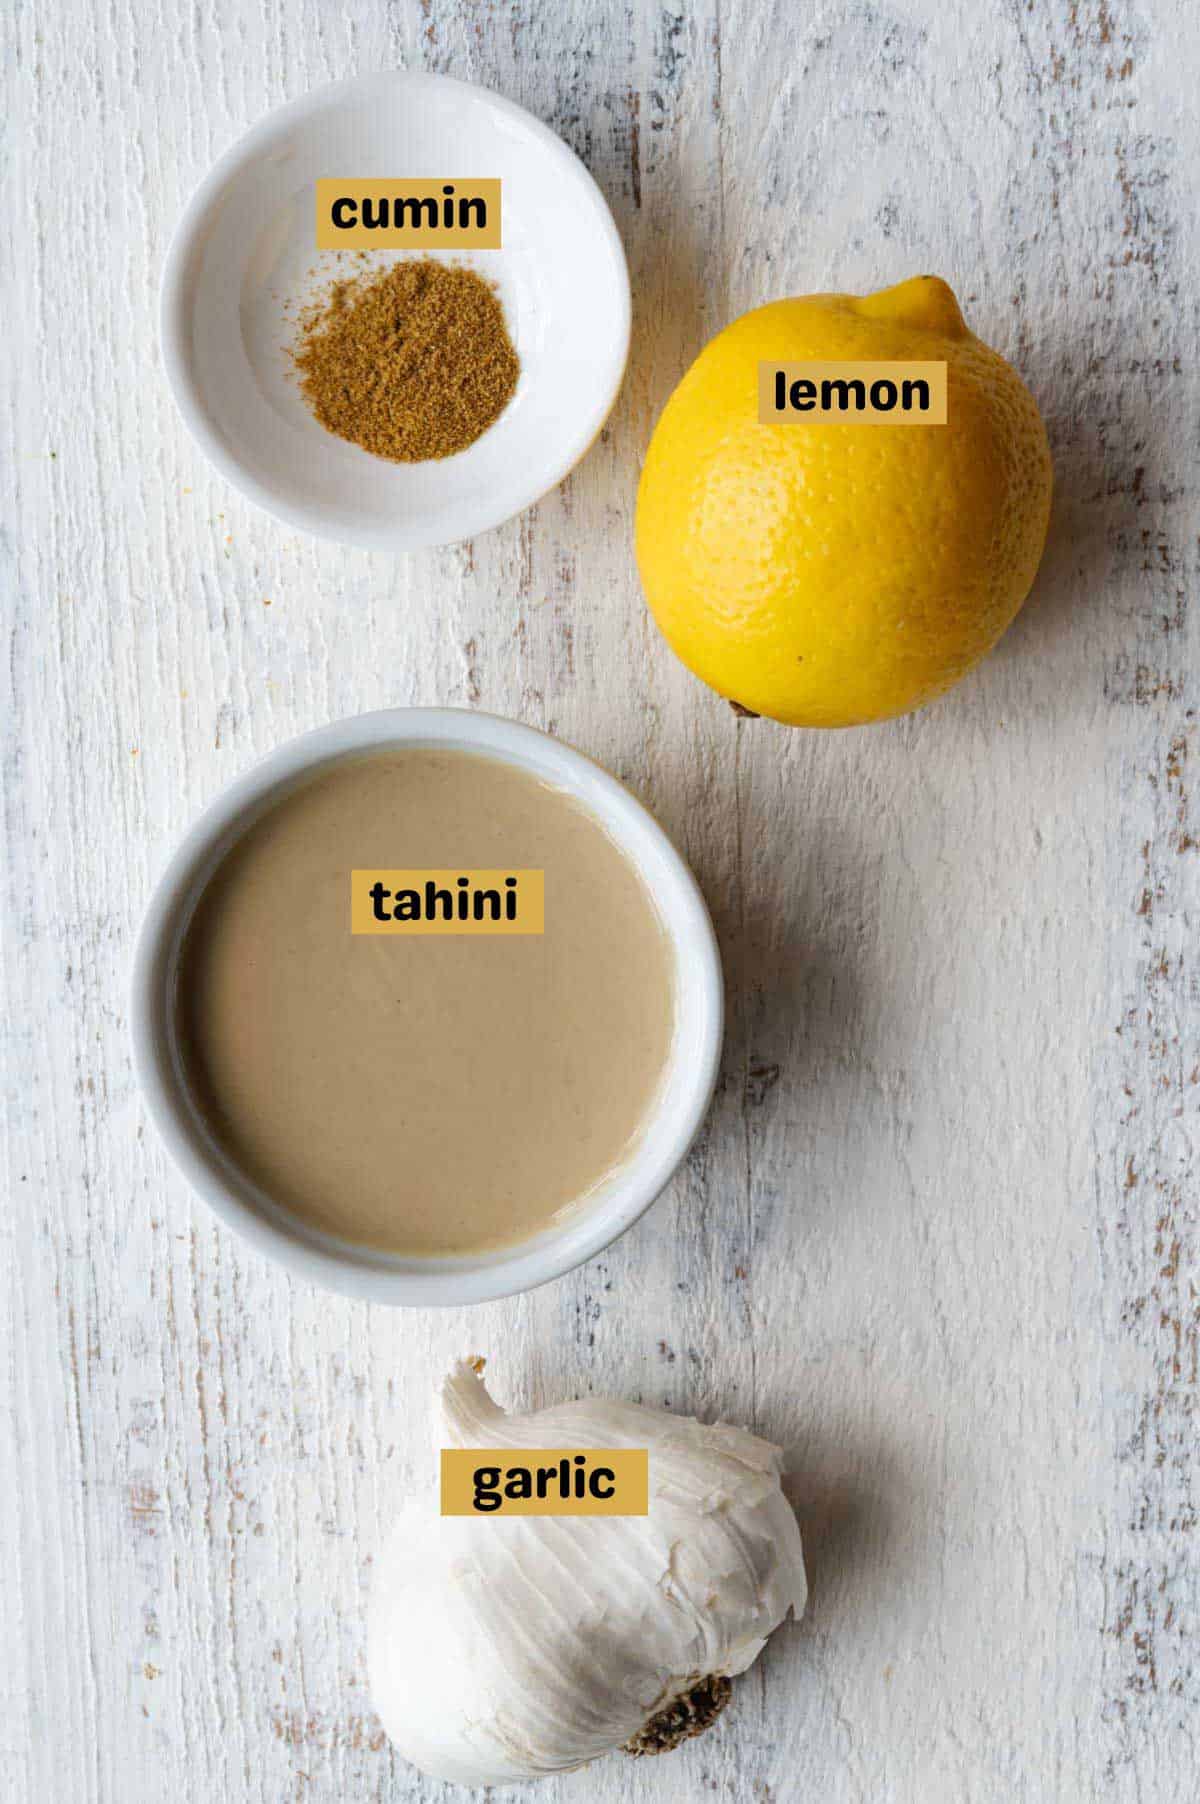 Cumin, lemon, tahini, and garlic on a white wooden backdrop.